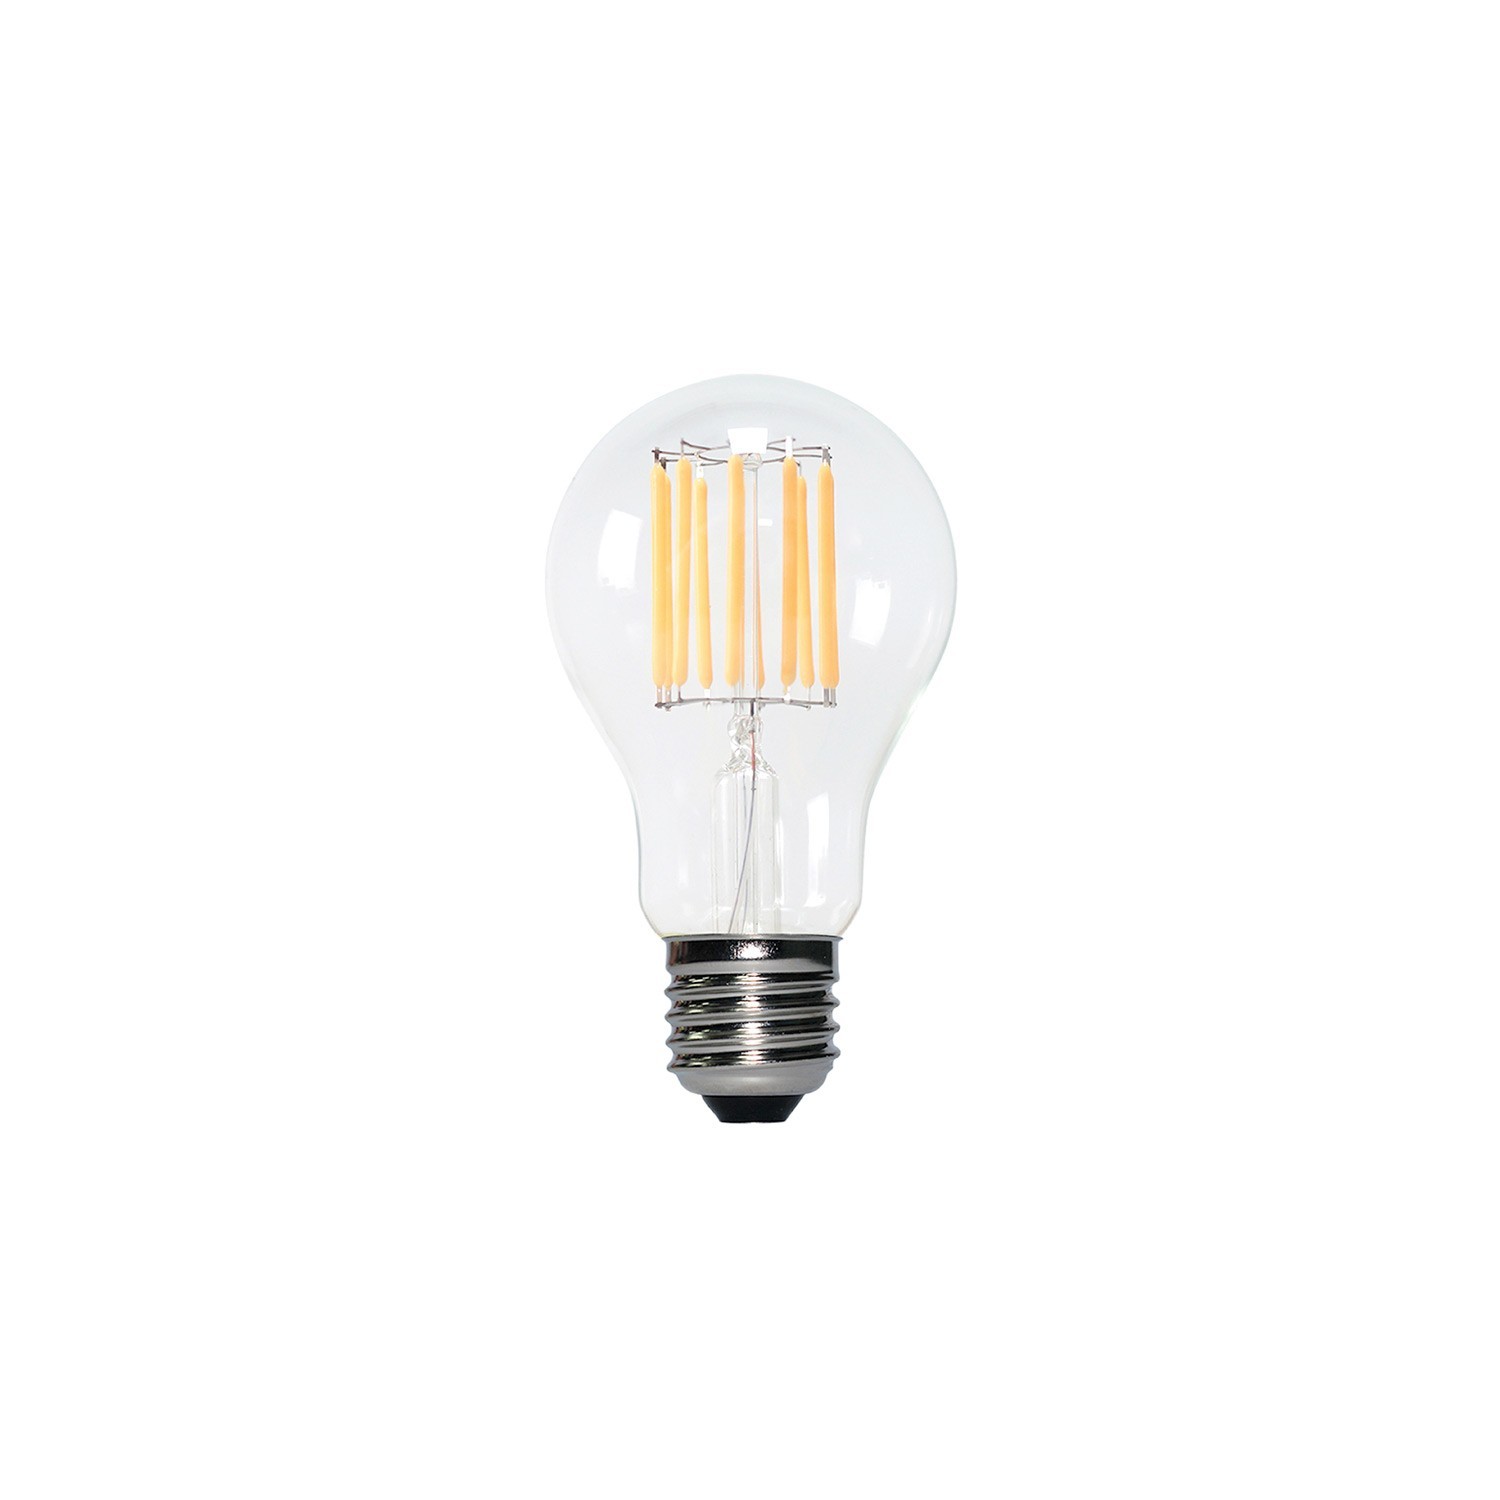 Lampadina LED Trasparente Linea 5V filamento verticale Goccia A60 1,3W 110Lm E27 2500K Dimmerabile - B02